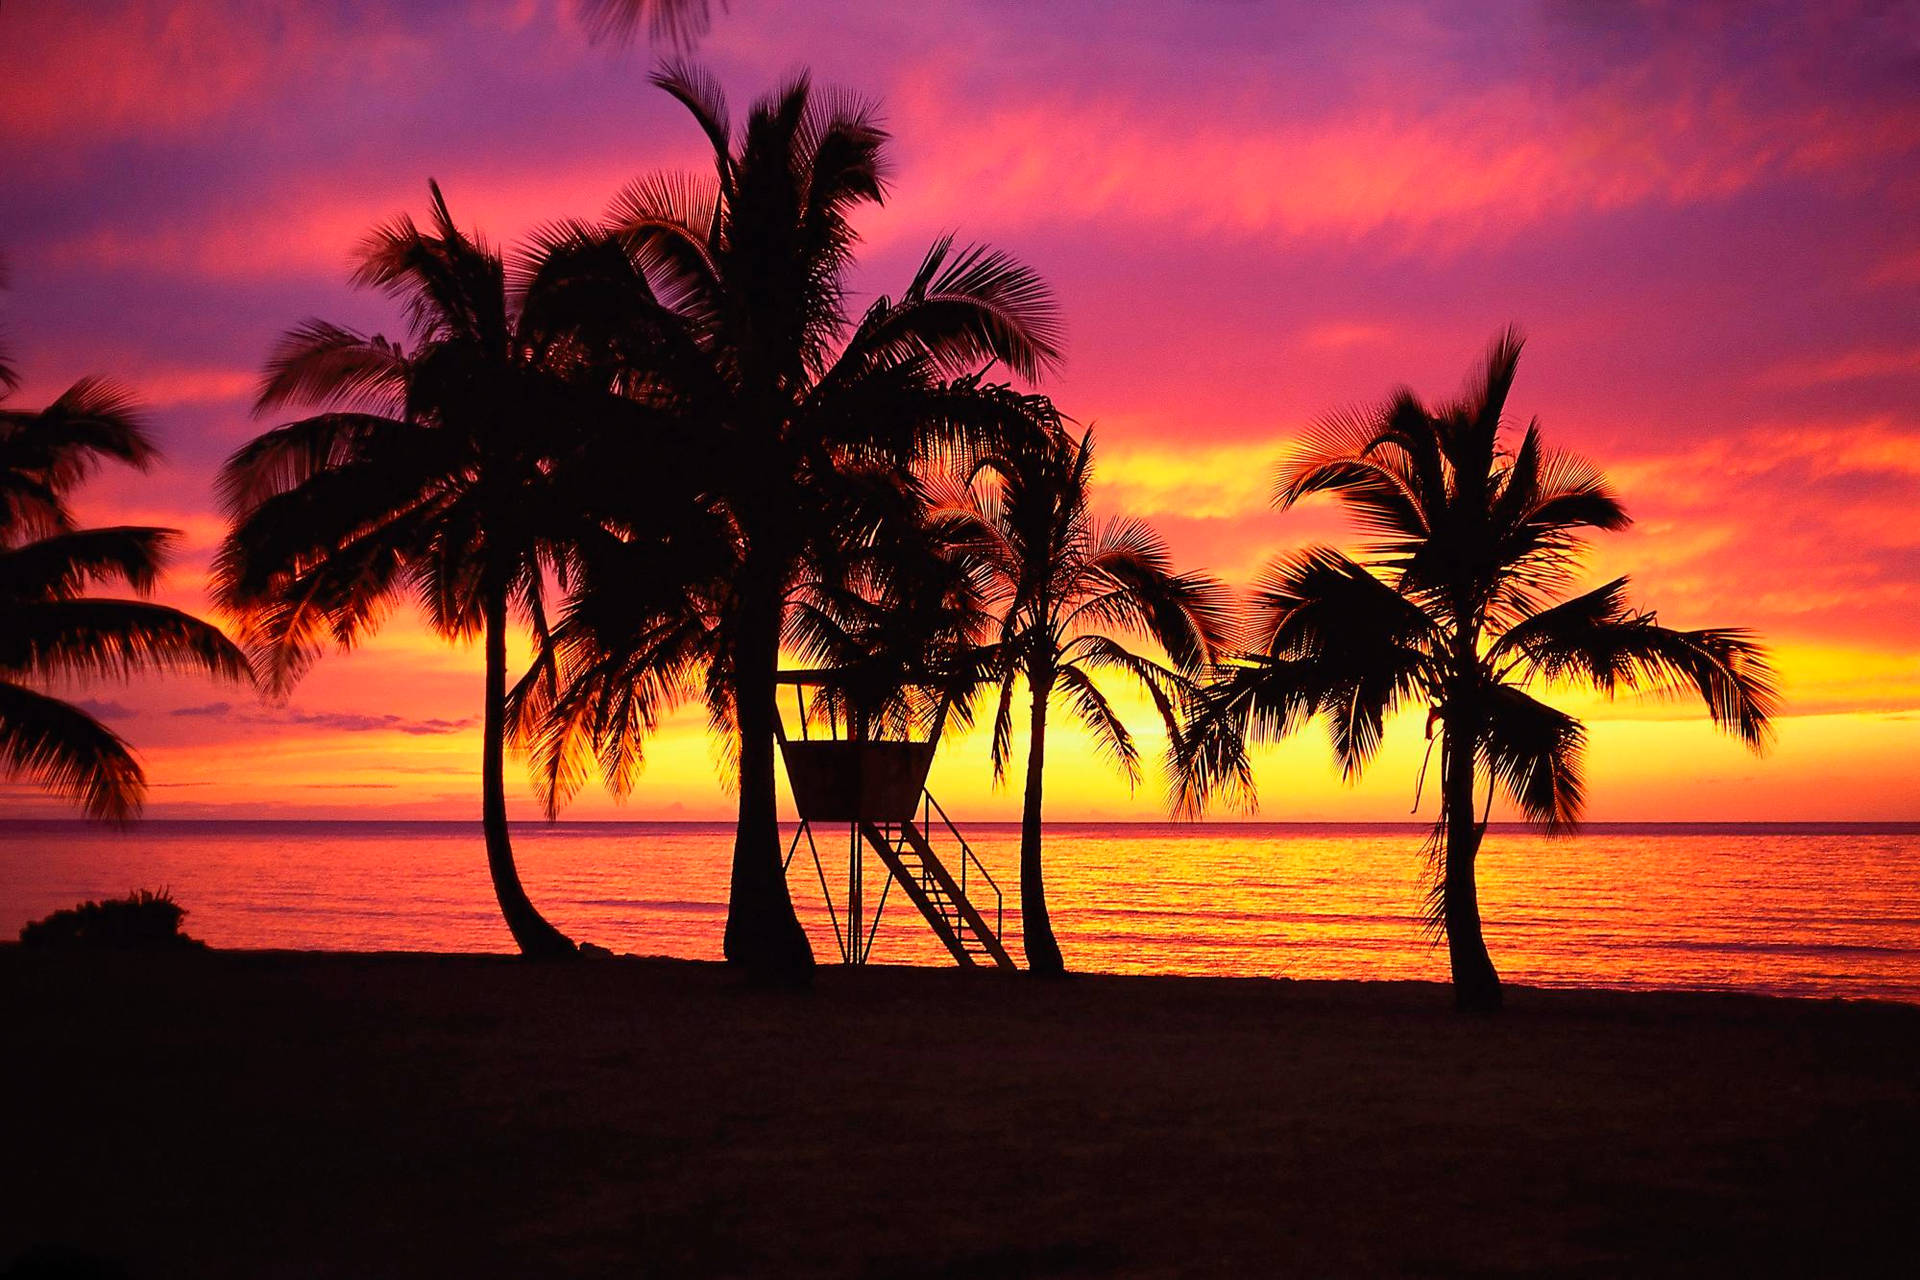 Enjoy A Romantic Beach Sunset.